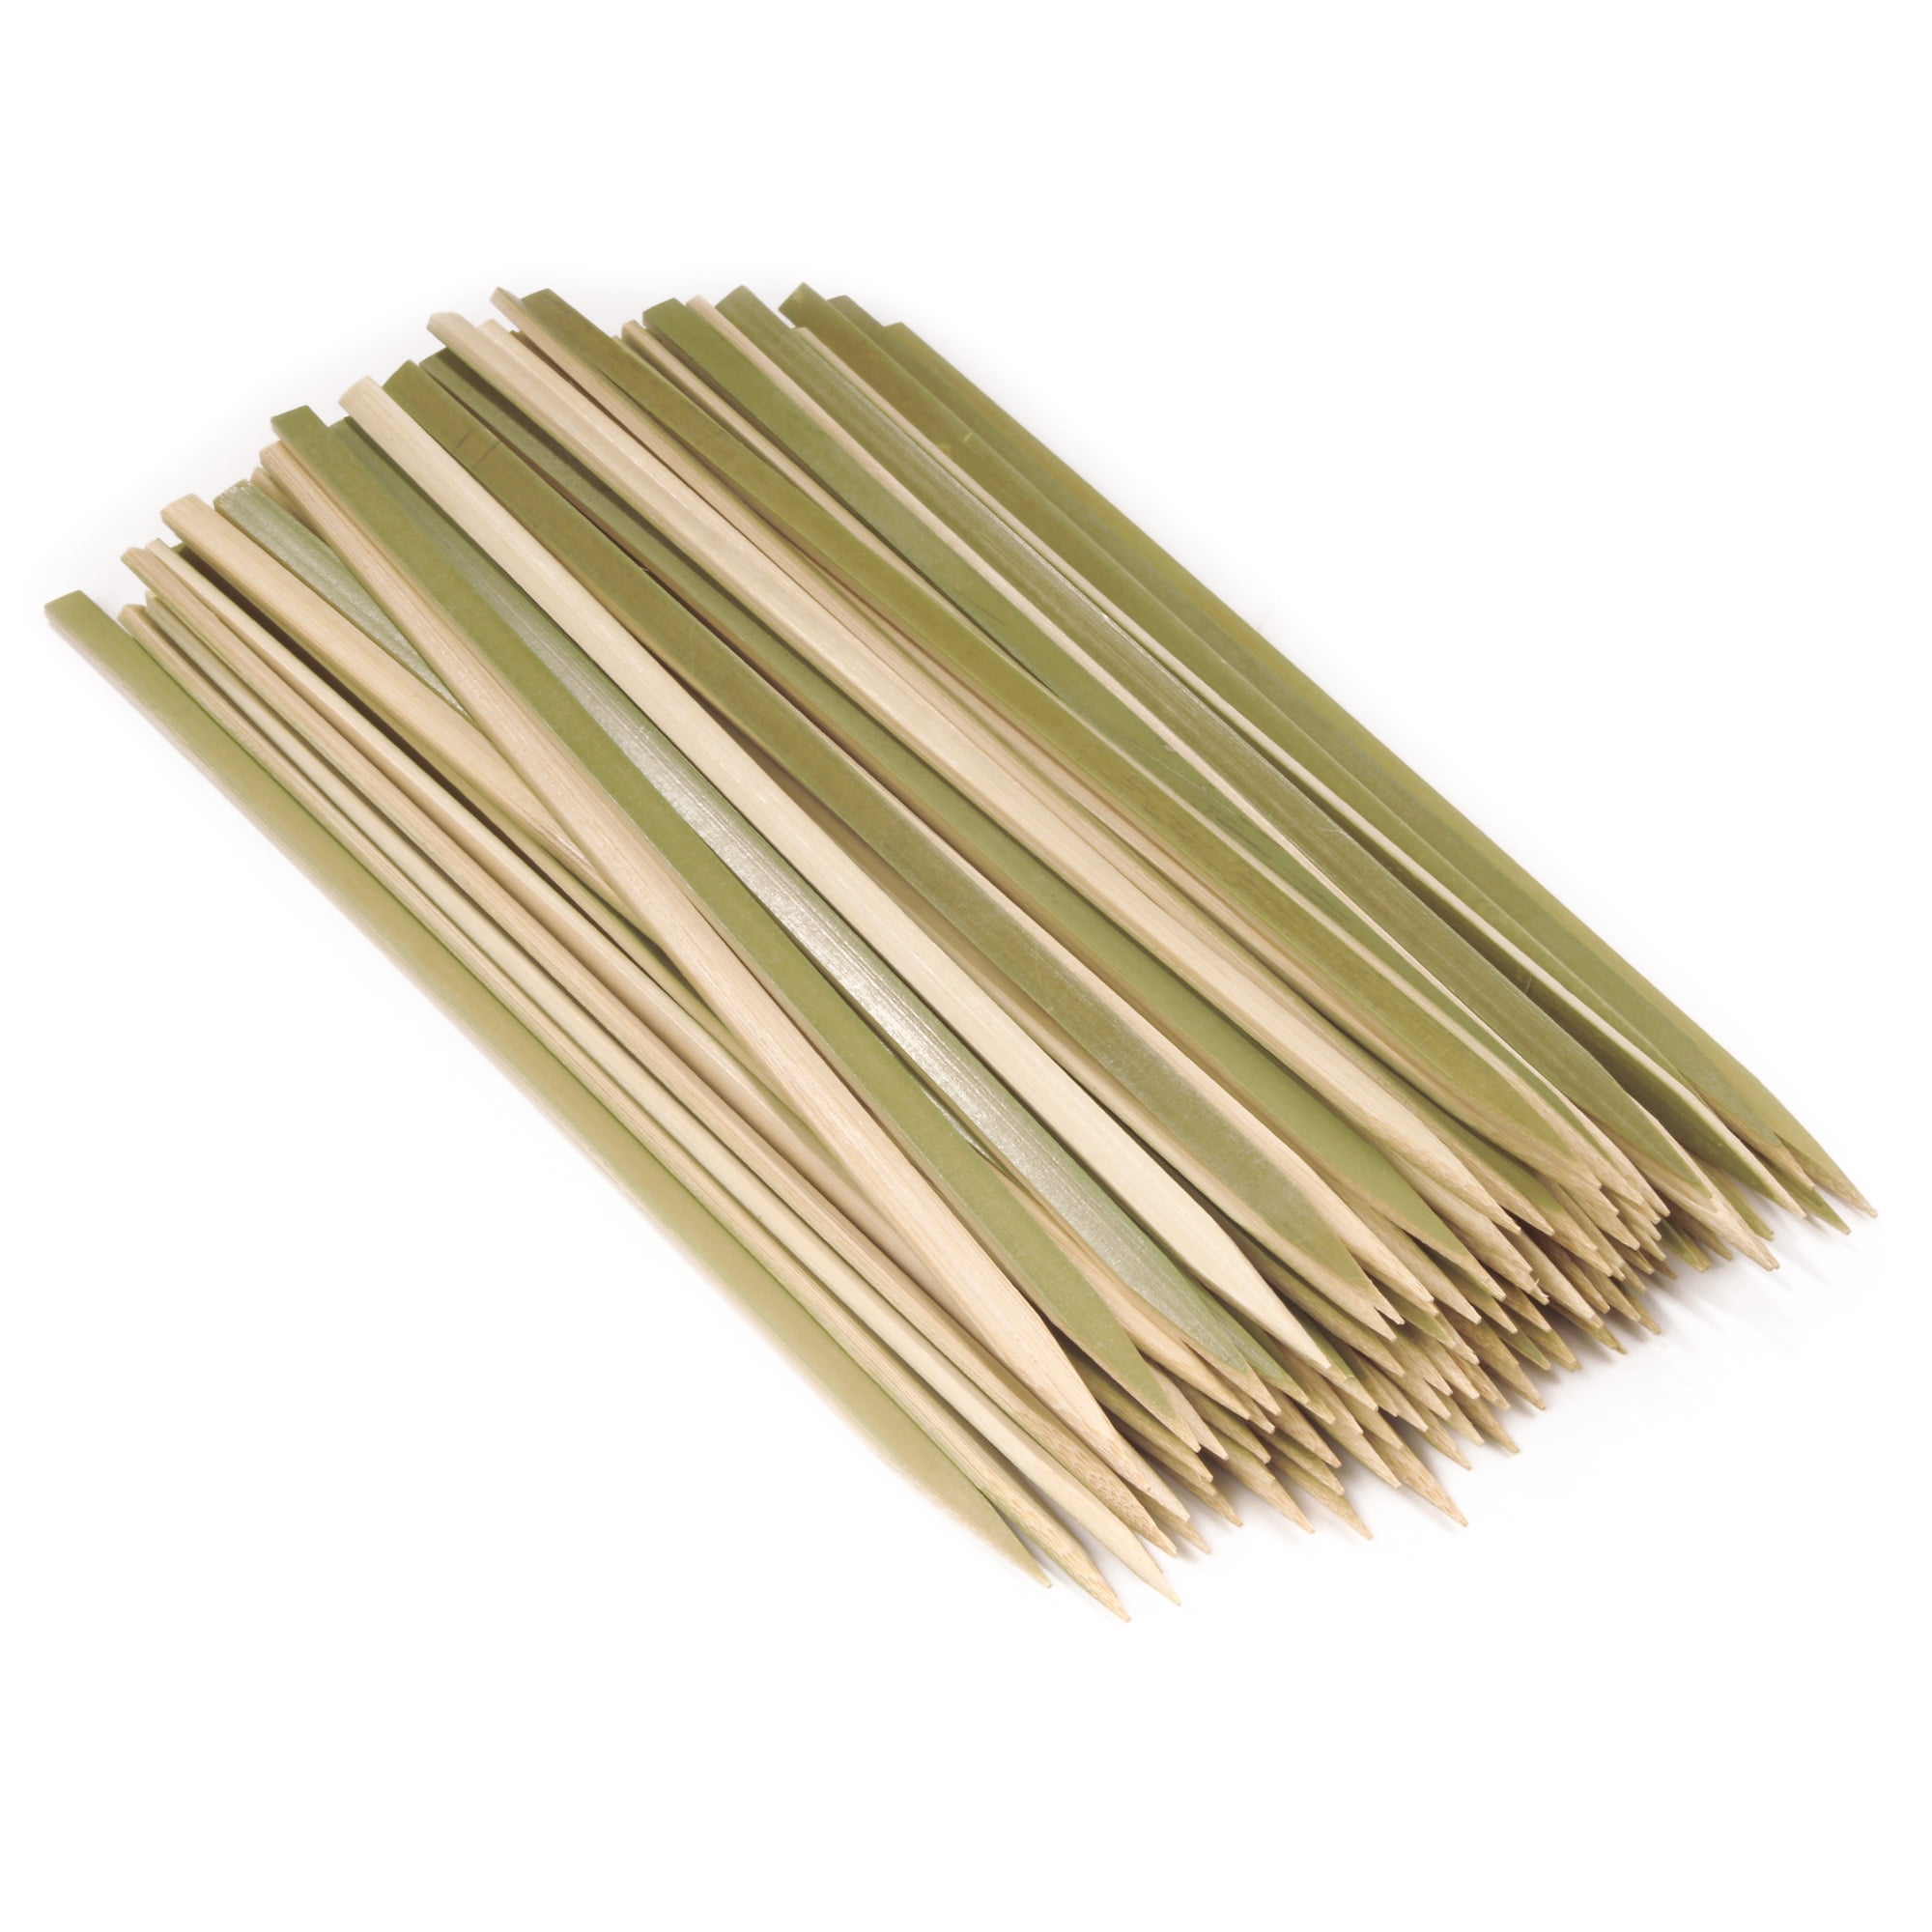 Bamboo Paddle Pick Skewers BambooMN Brand Wholesale 